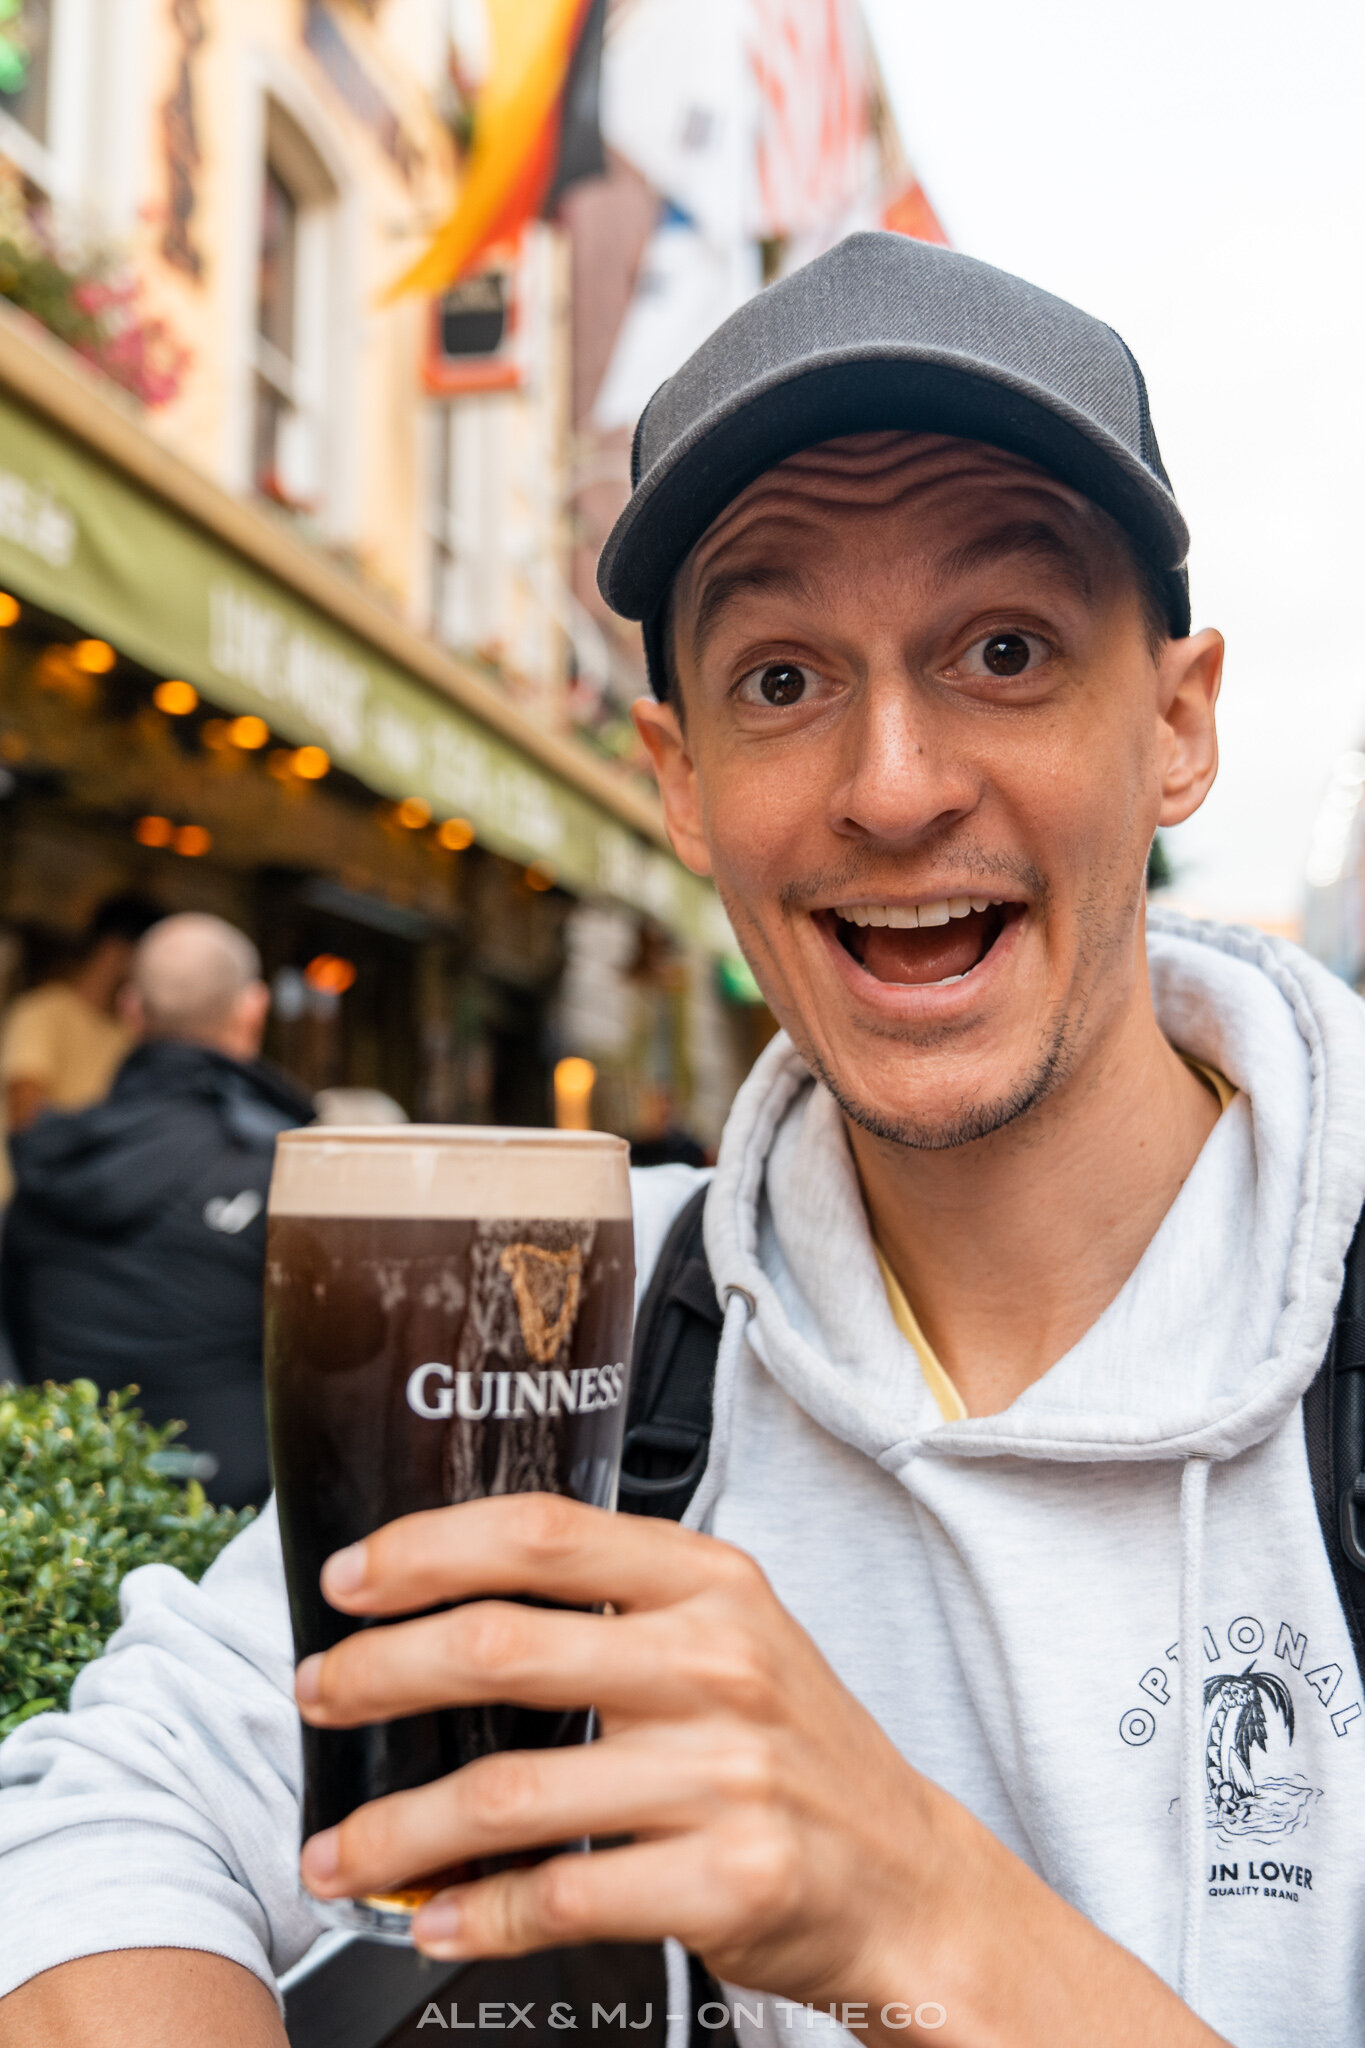 Alex_MJ_ON_THE_GO_Temple_Bar_Boire une Guinness.jpg